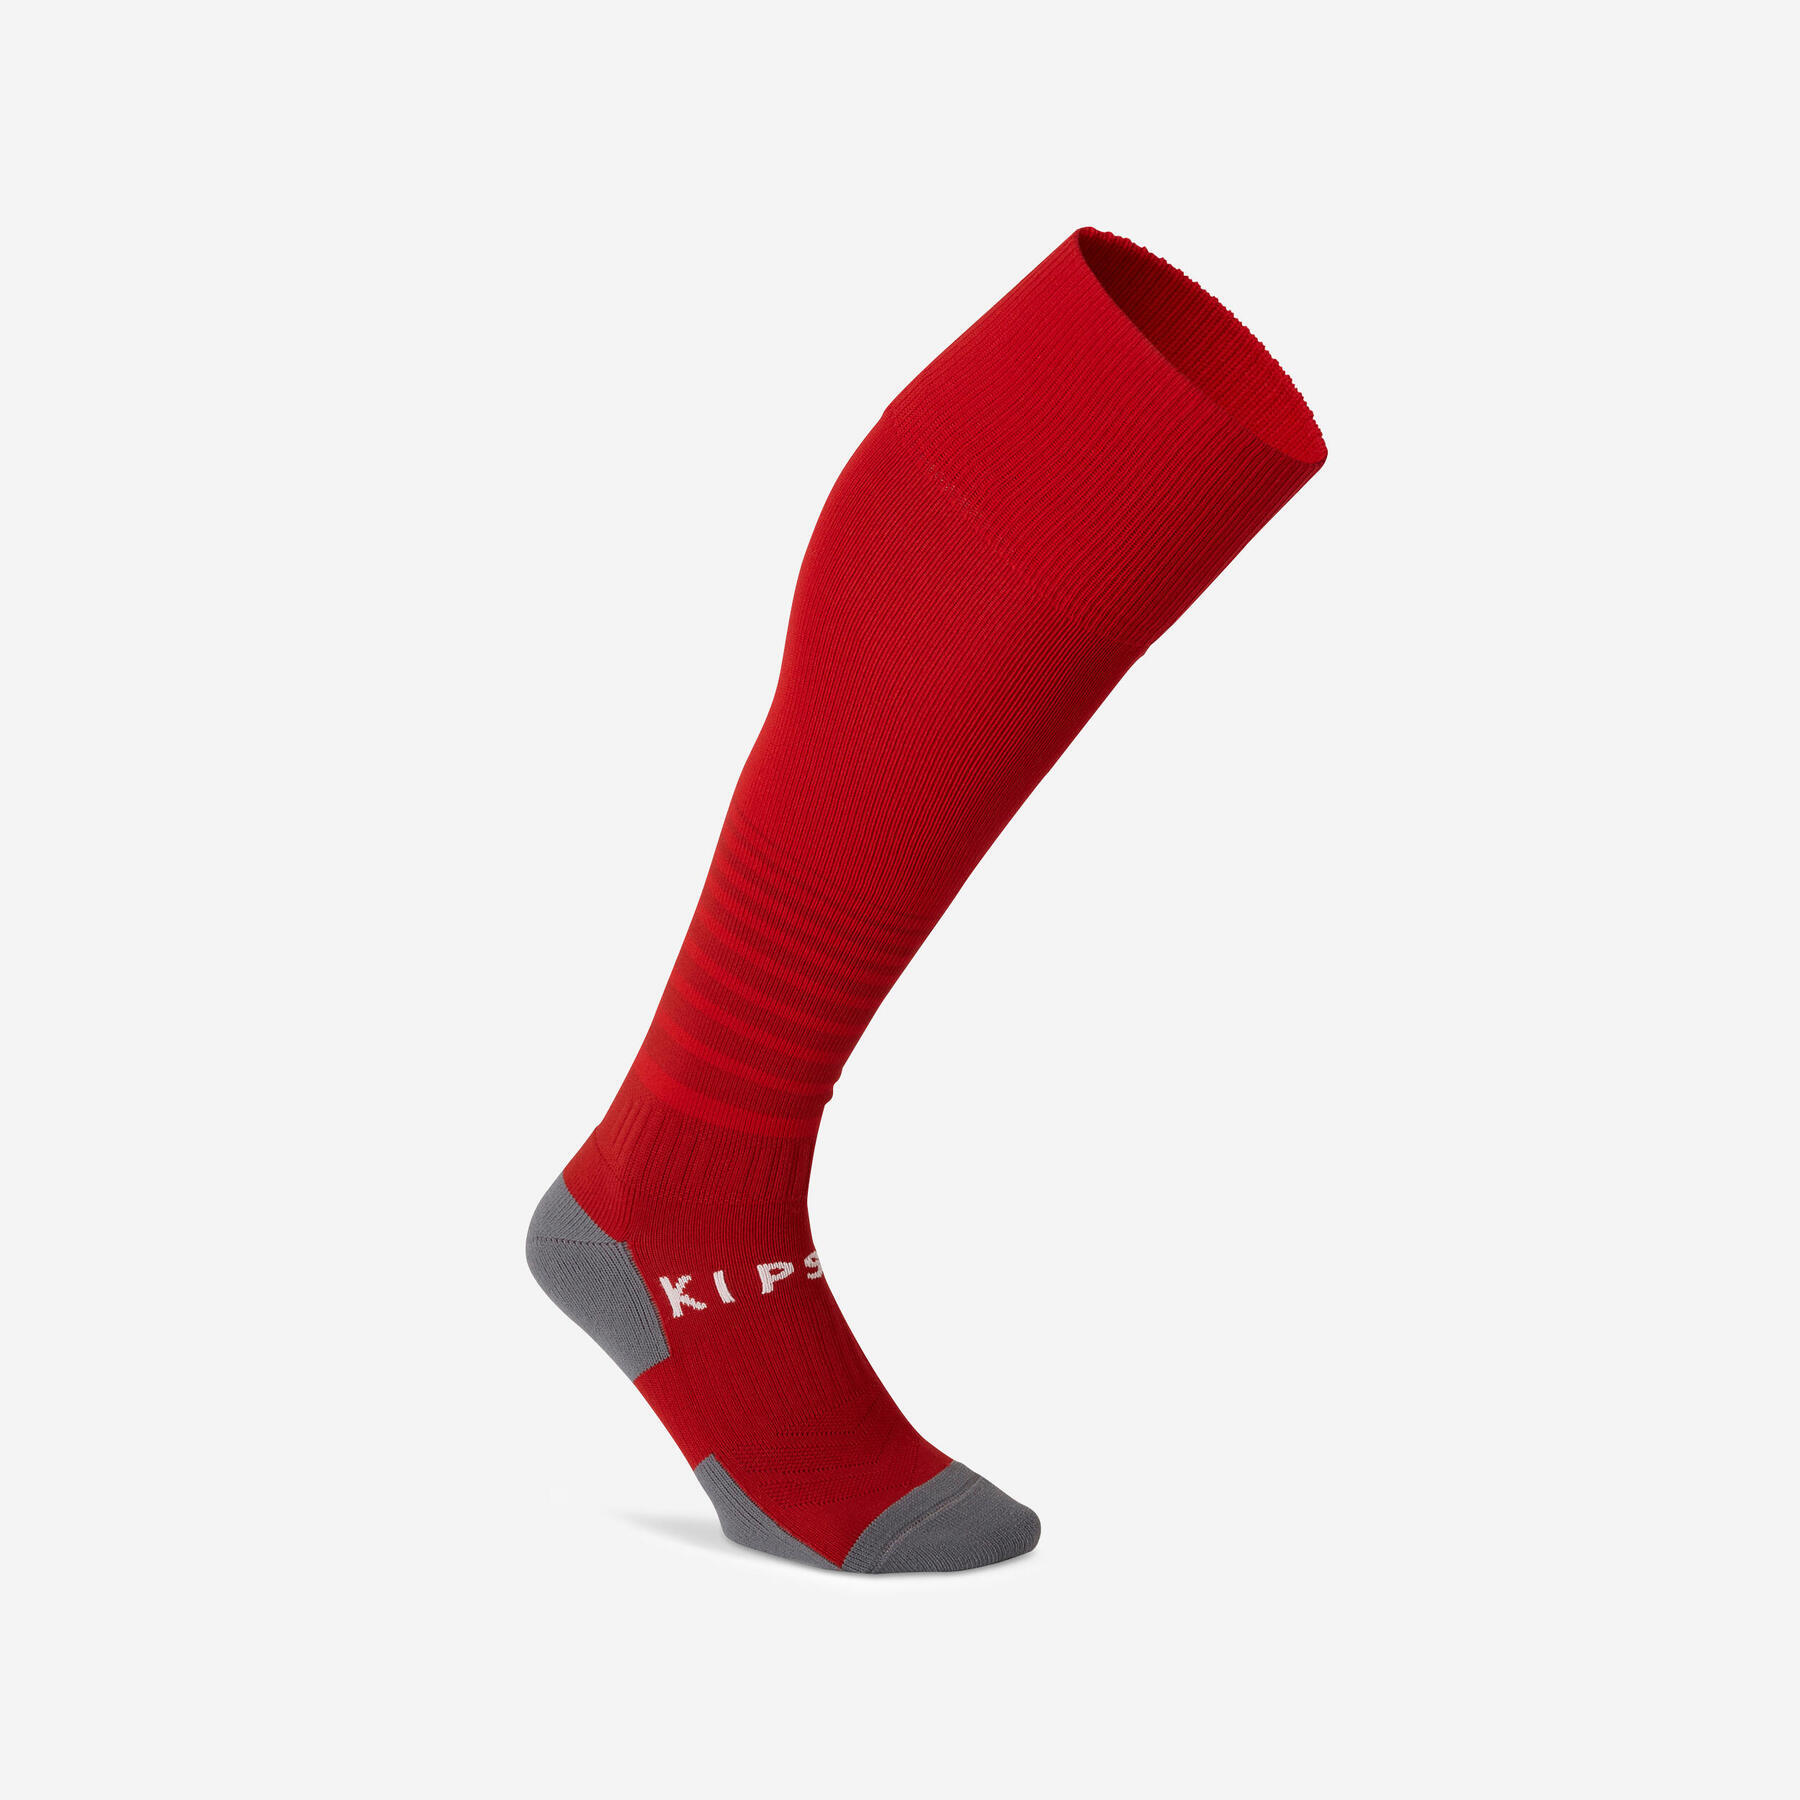 Refurbished football Socks Viralto Club - Red - A Grade